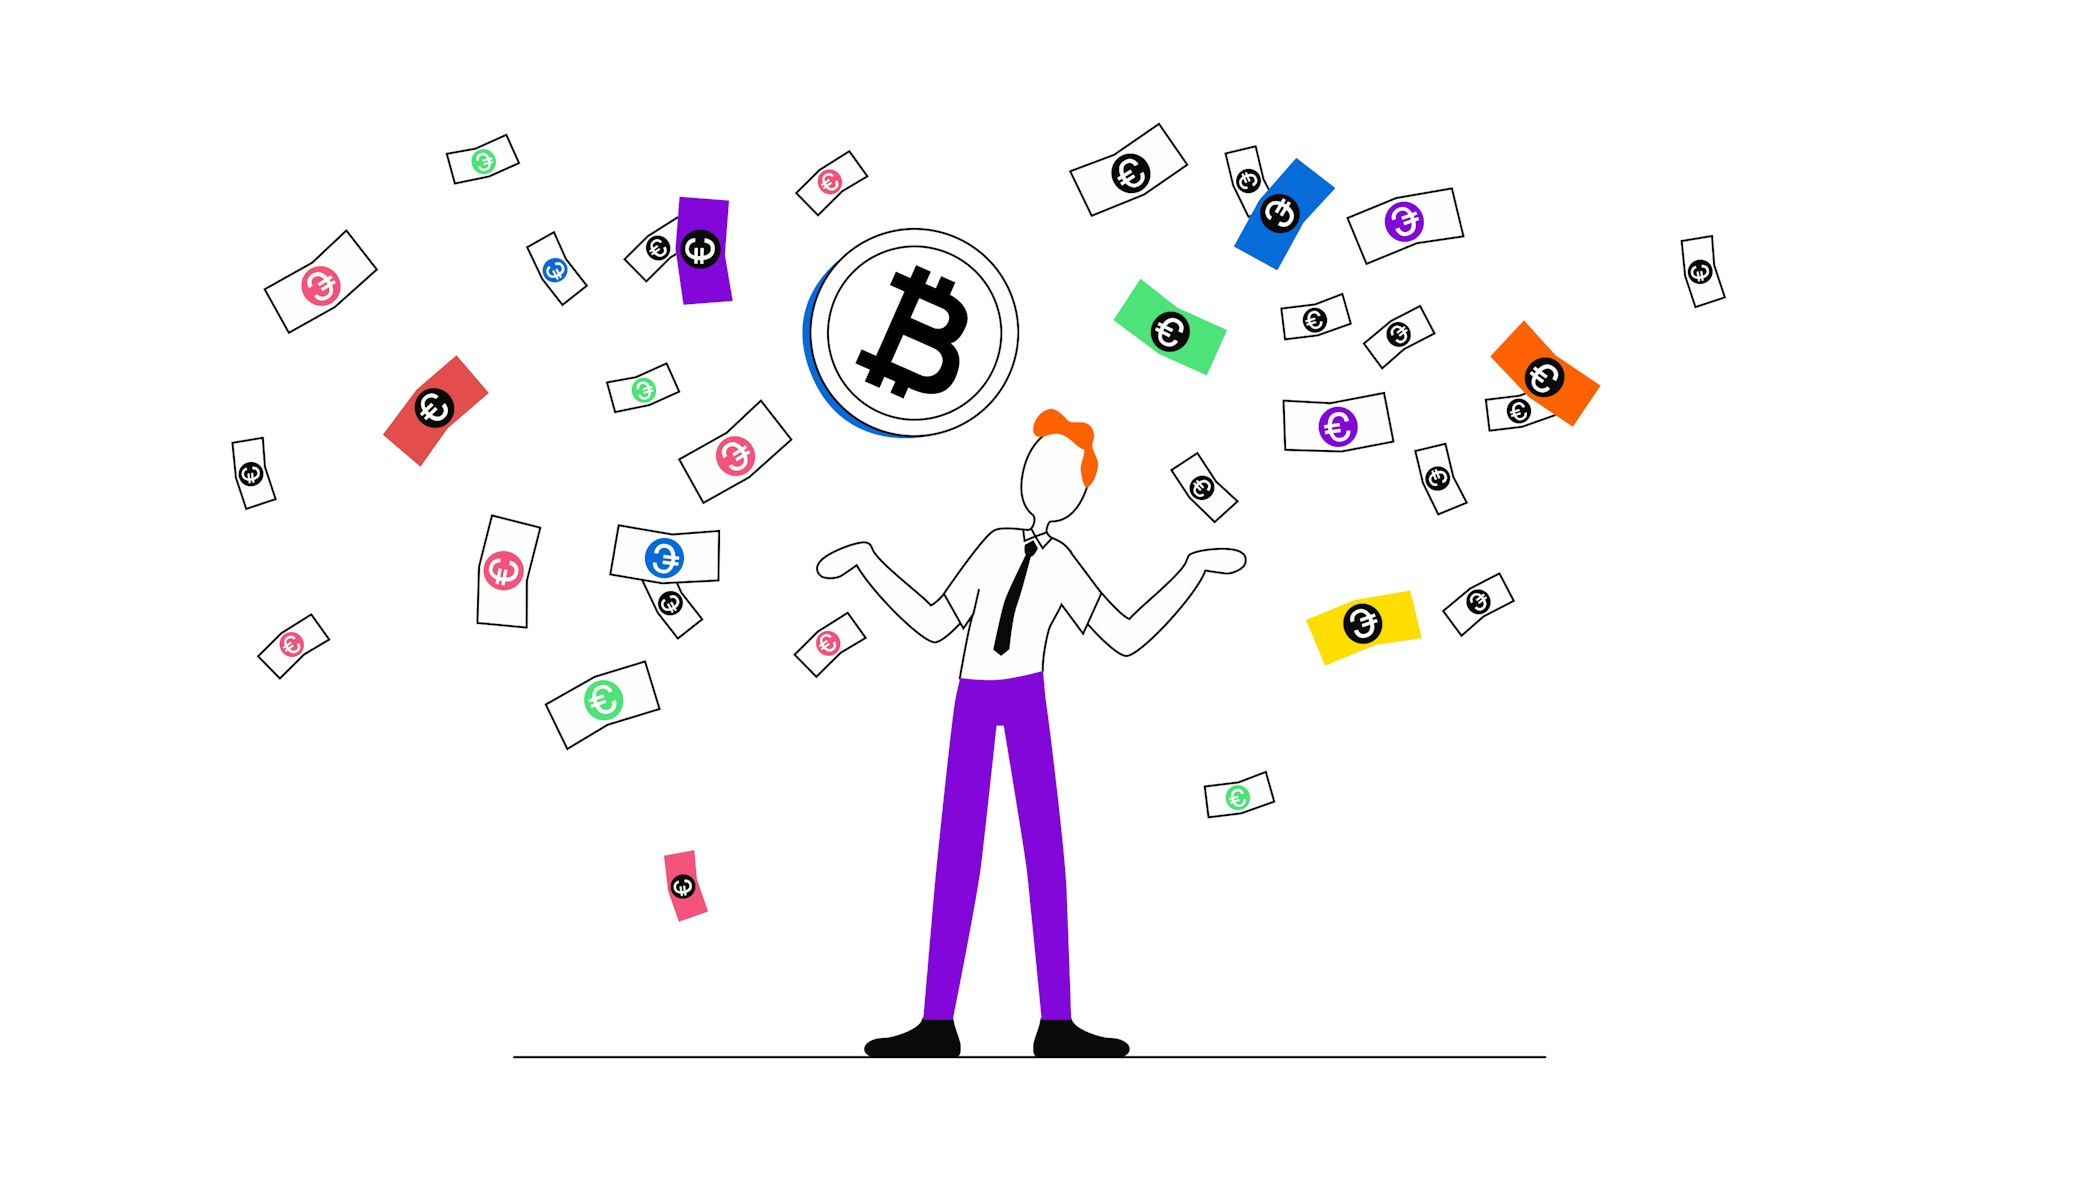 Börse, App, Wertpapier: So kaufst Du Bitcoin